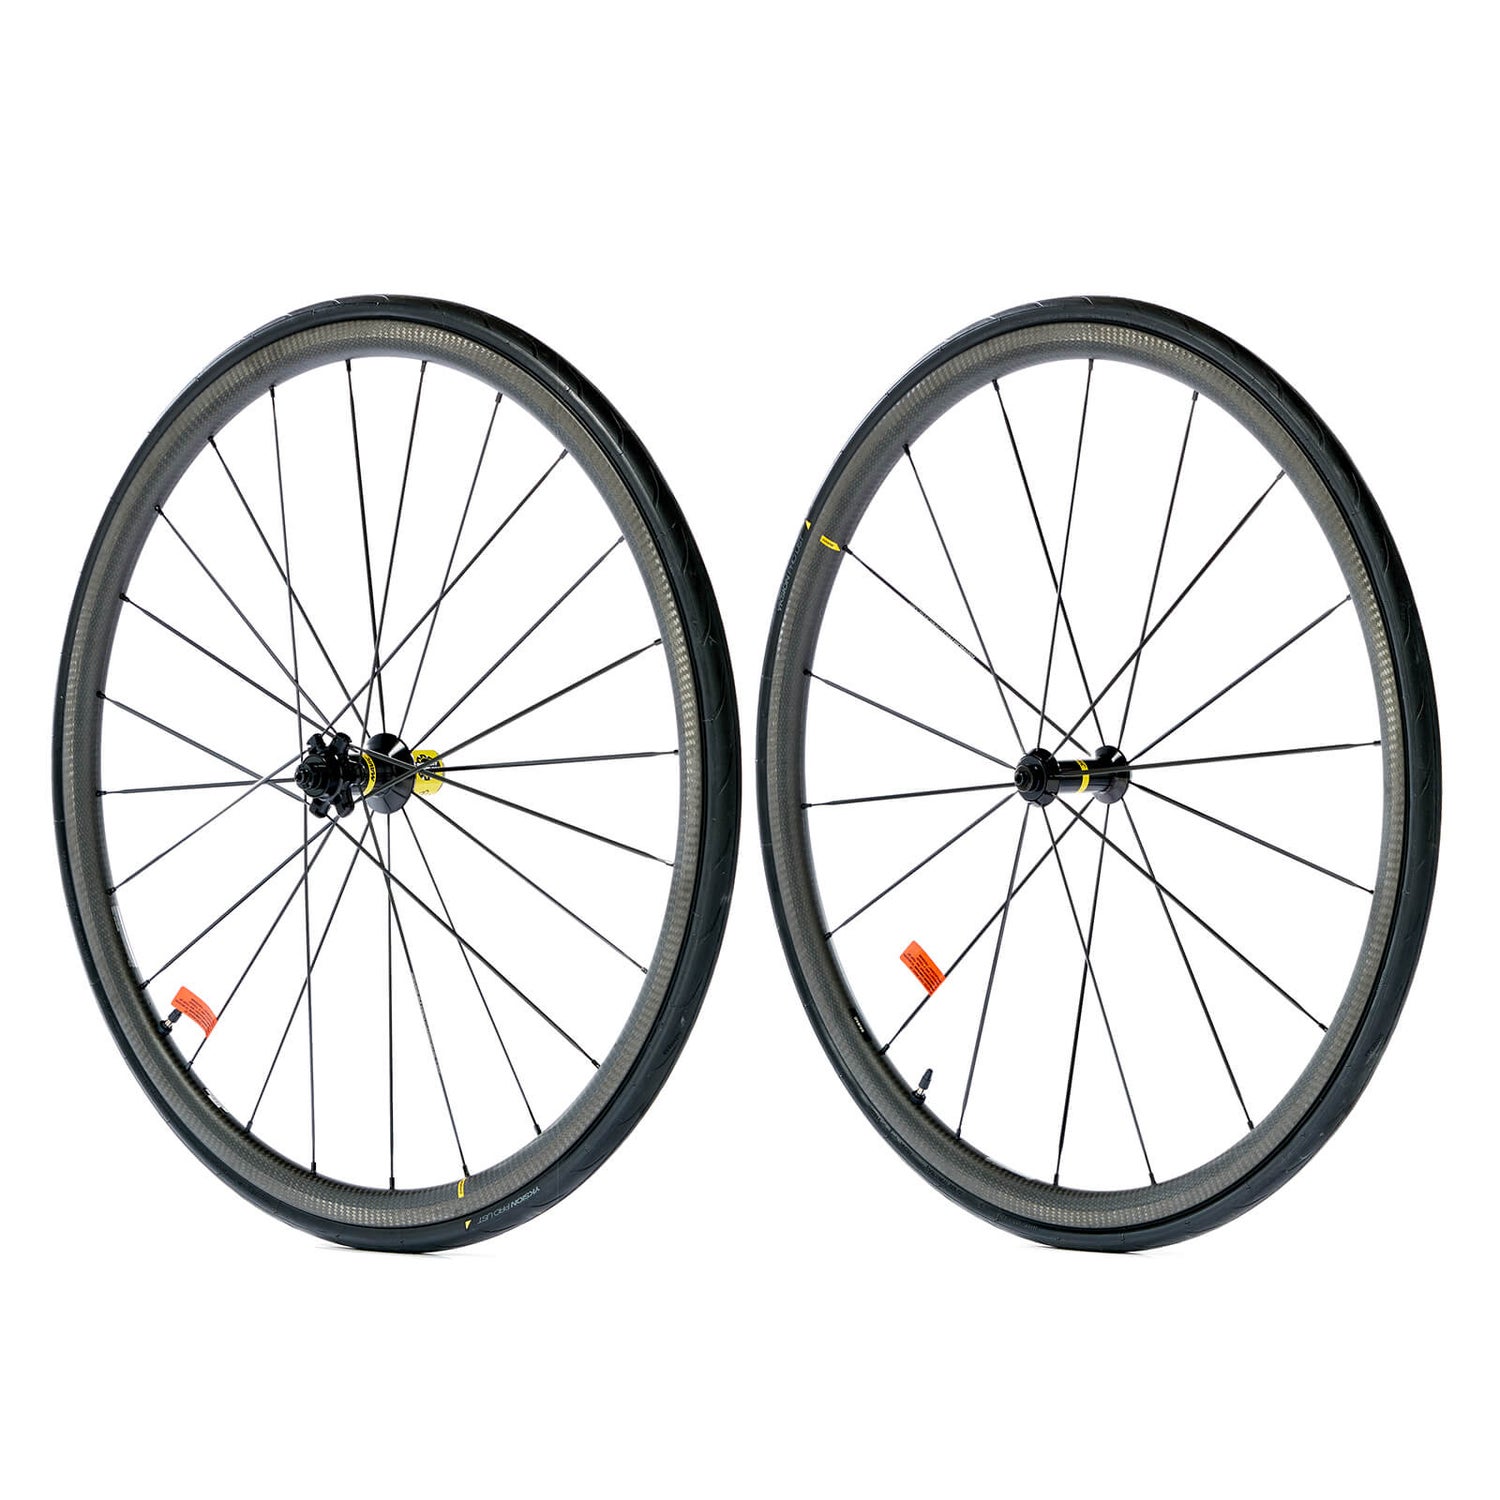 Mavic Ksyrium Pro Carbon SL UST Wheelset - 2020 | ProBikeKit.com